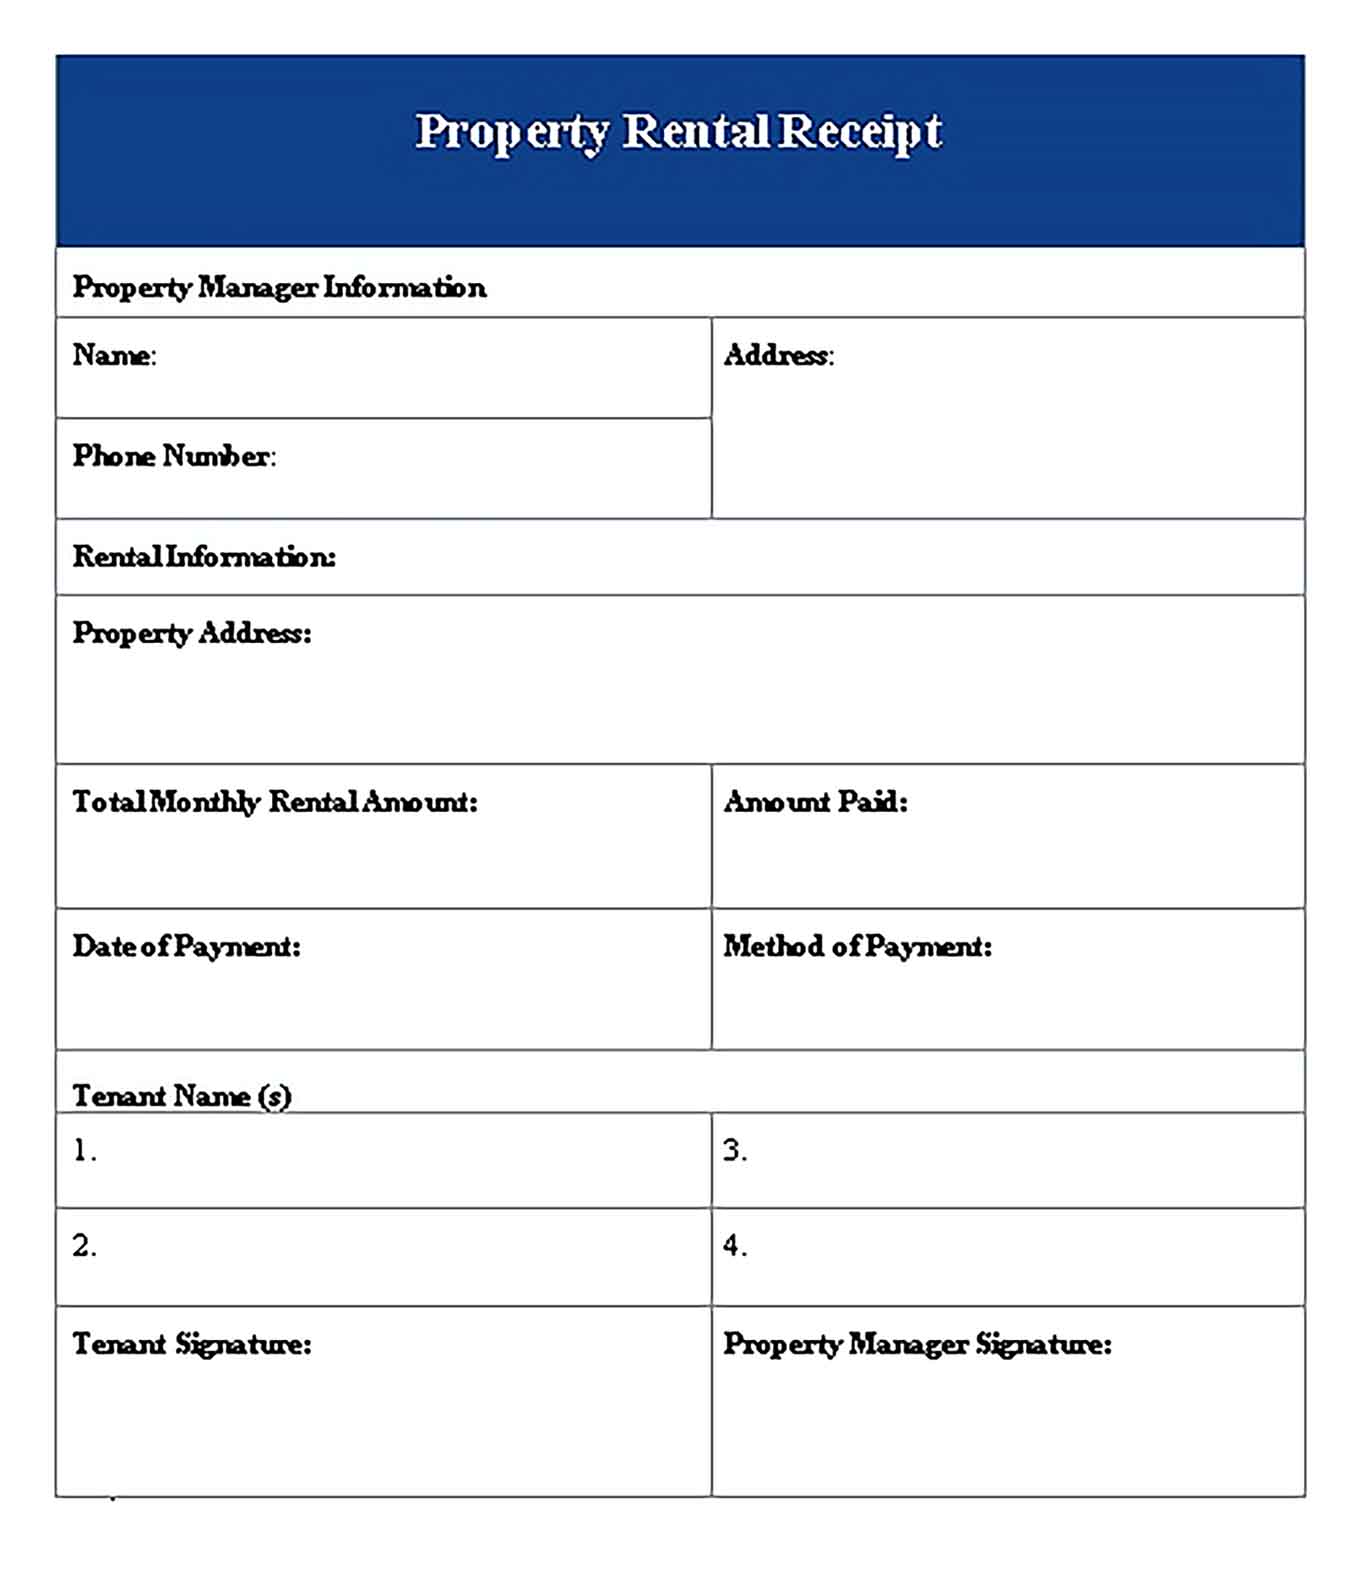 Sample Property Rental Receipt Templates